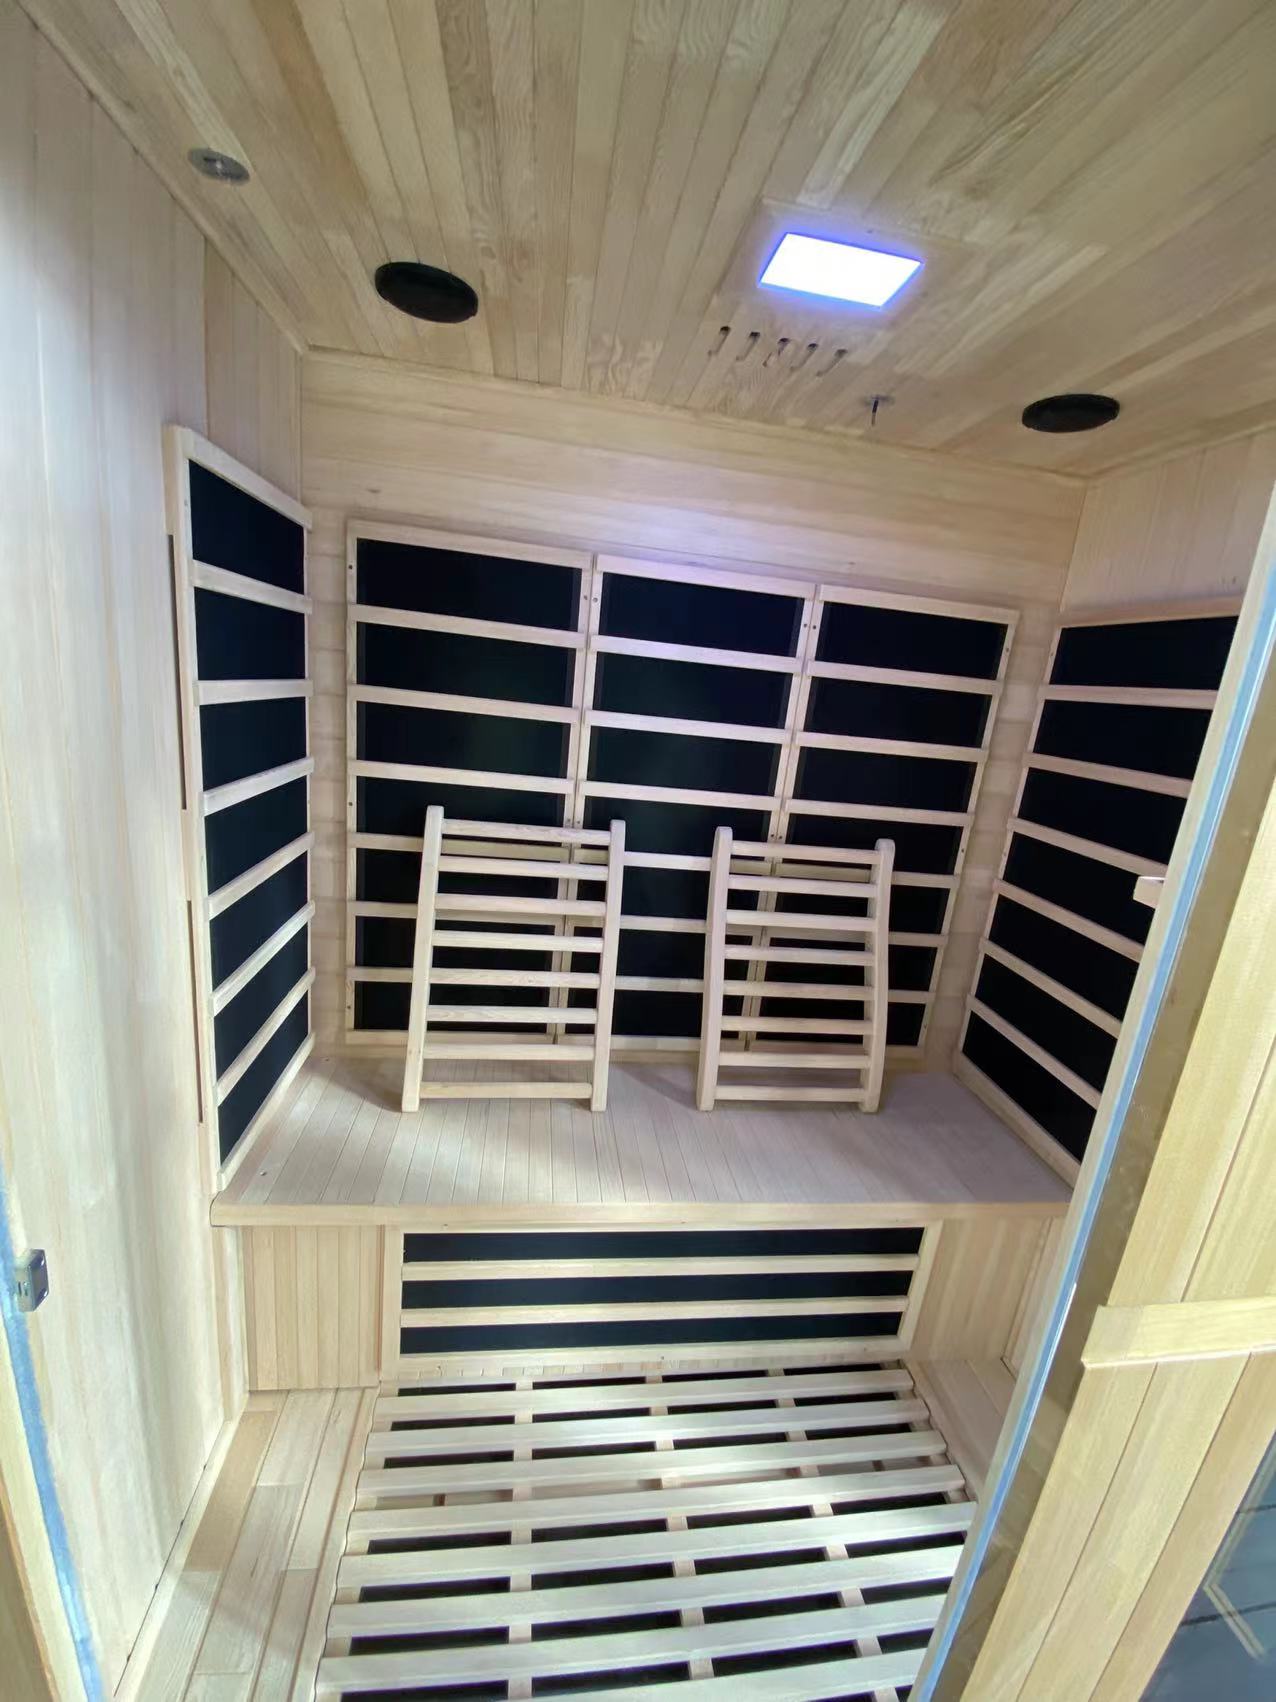 Kylin Superior Carbon Far Infrared Sauna Room 3 person – KY-033LW